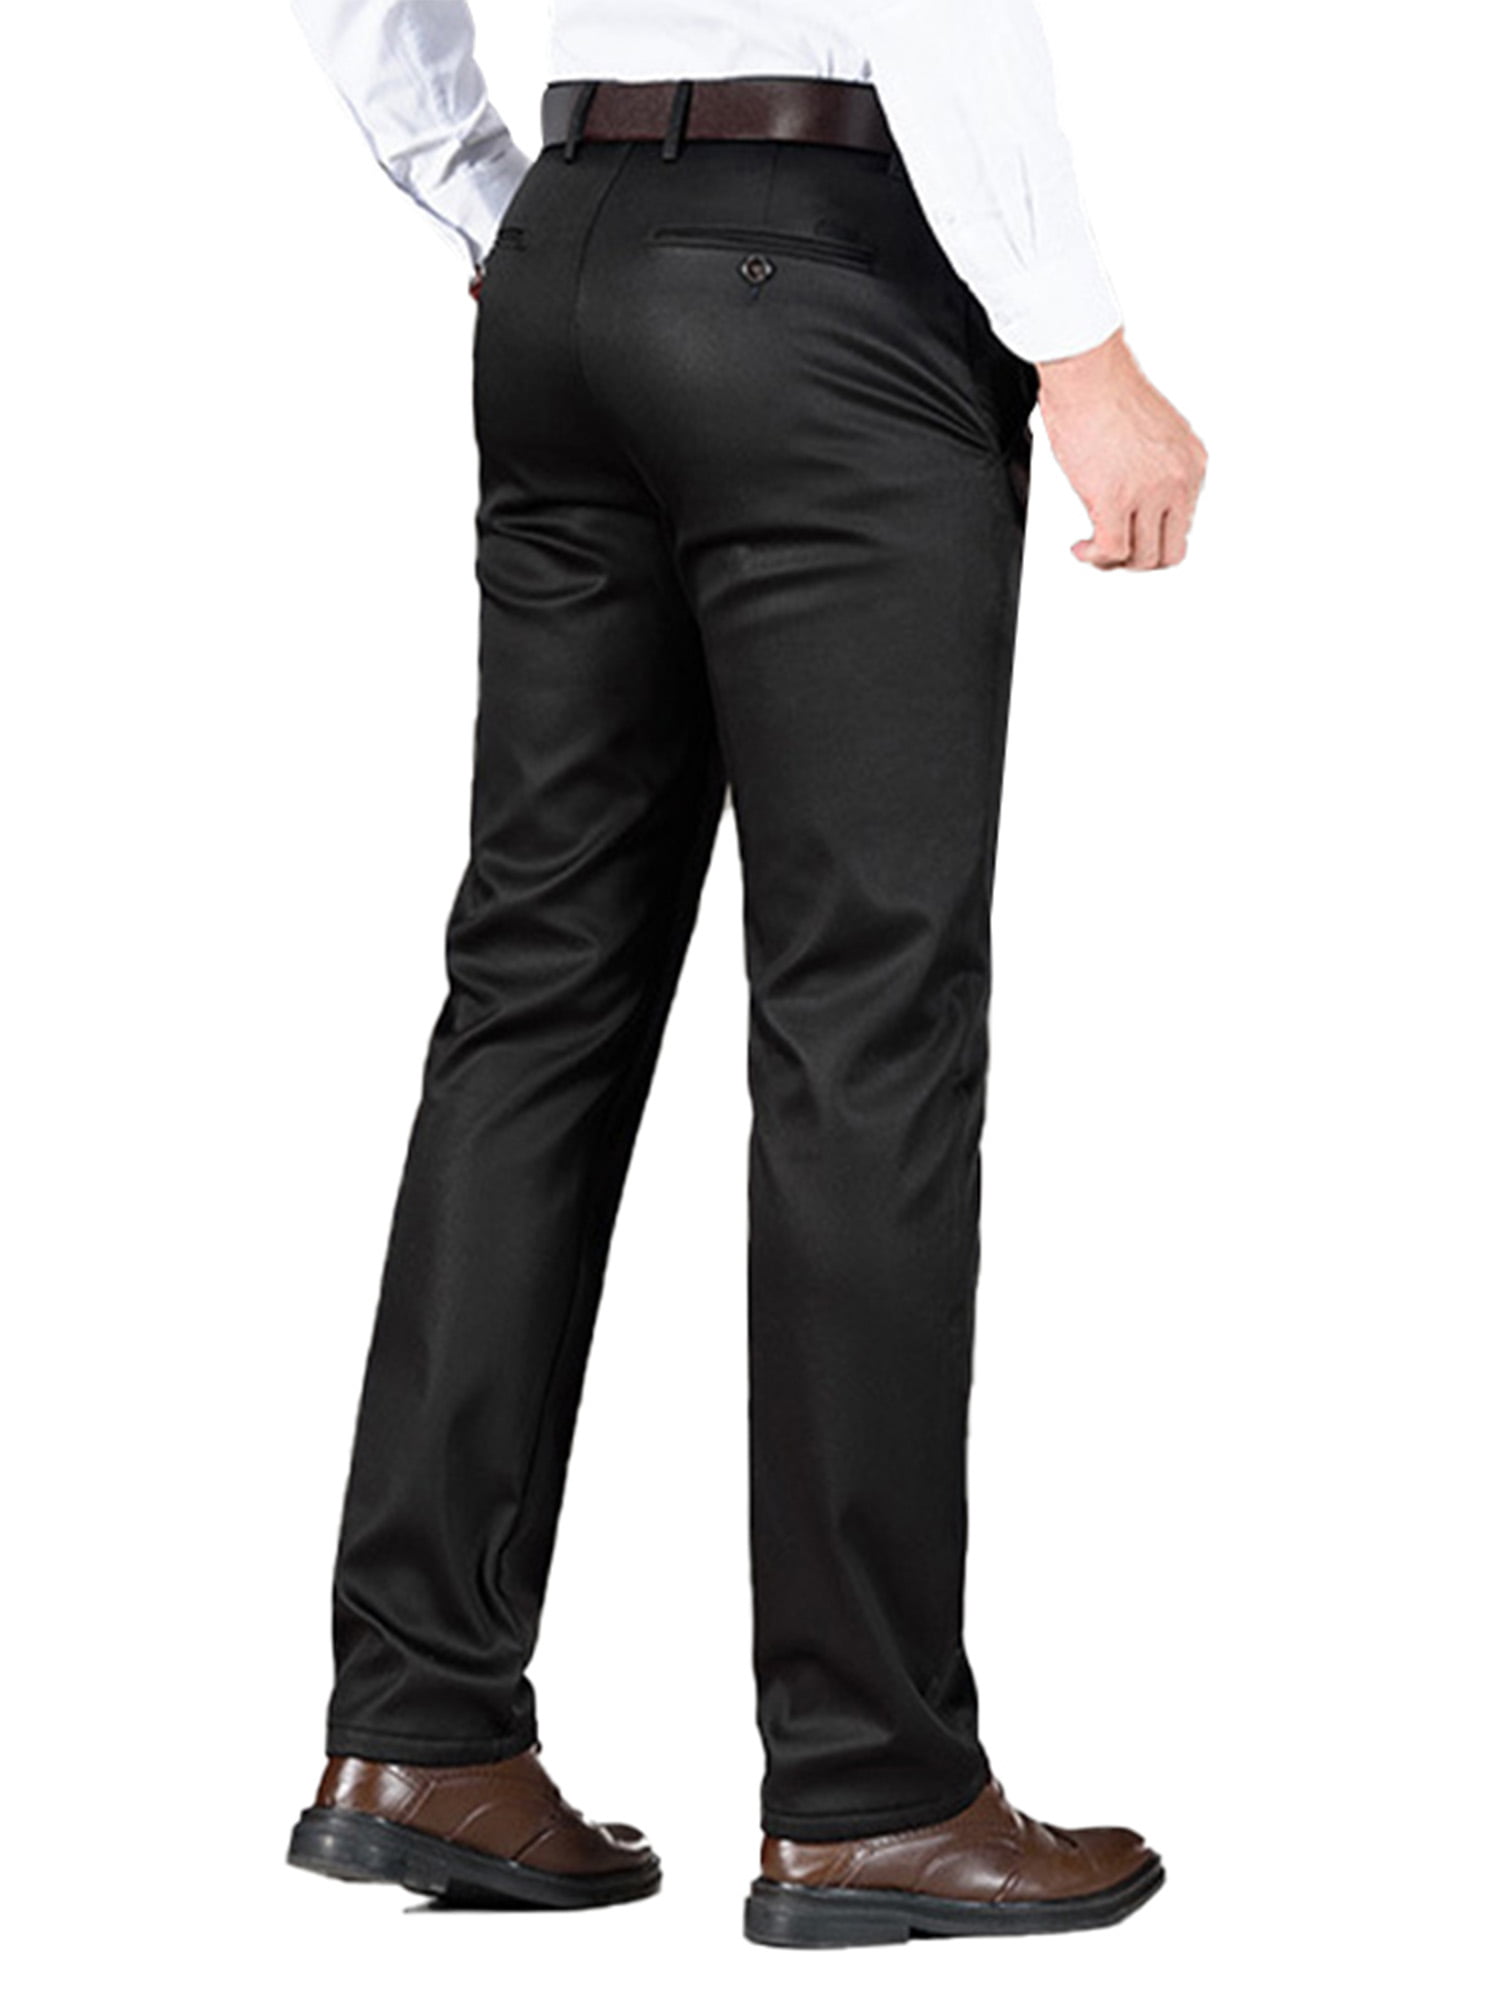 Black | Dress Pants For Women | Formal Pants | H&M US-hkpdtq2012.edu.vn